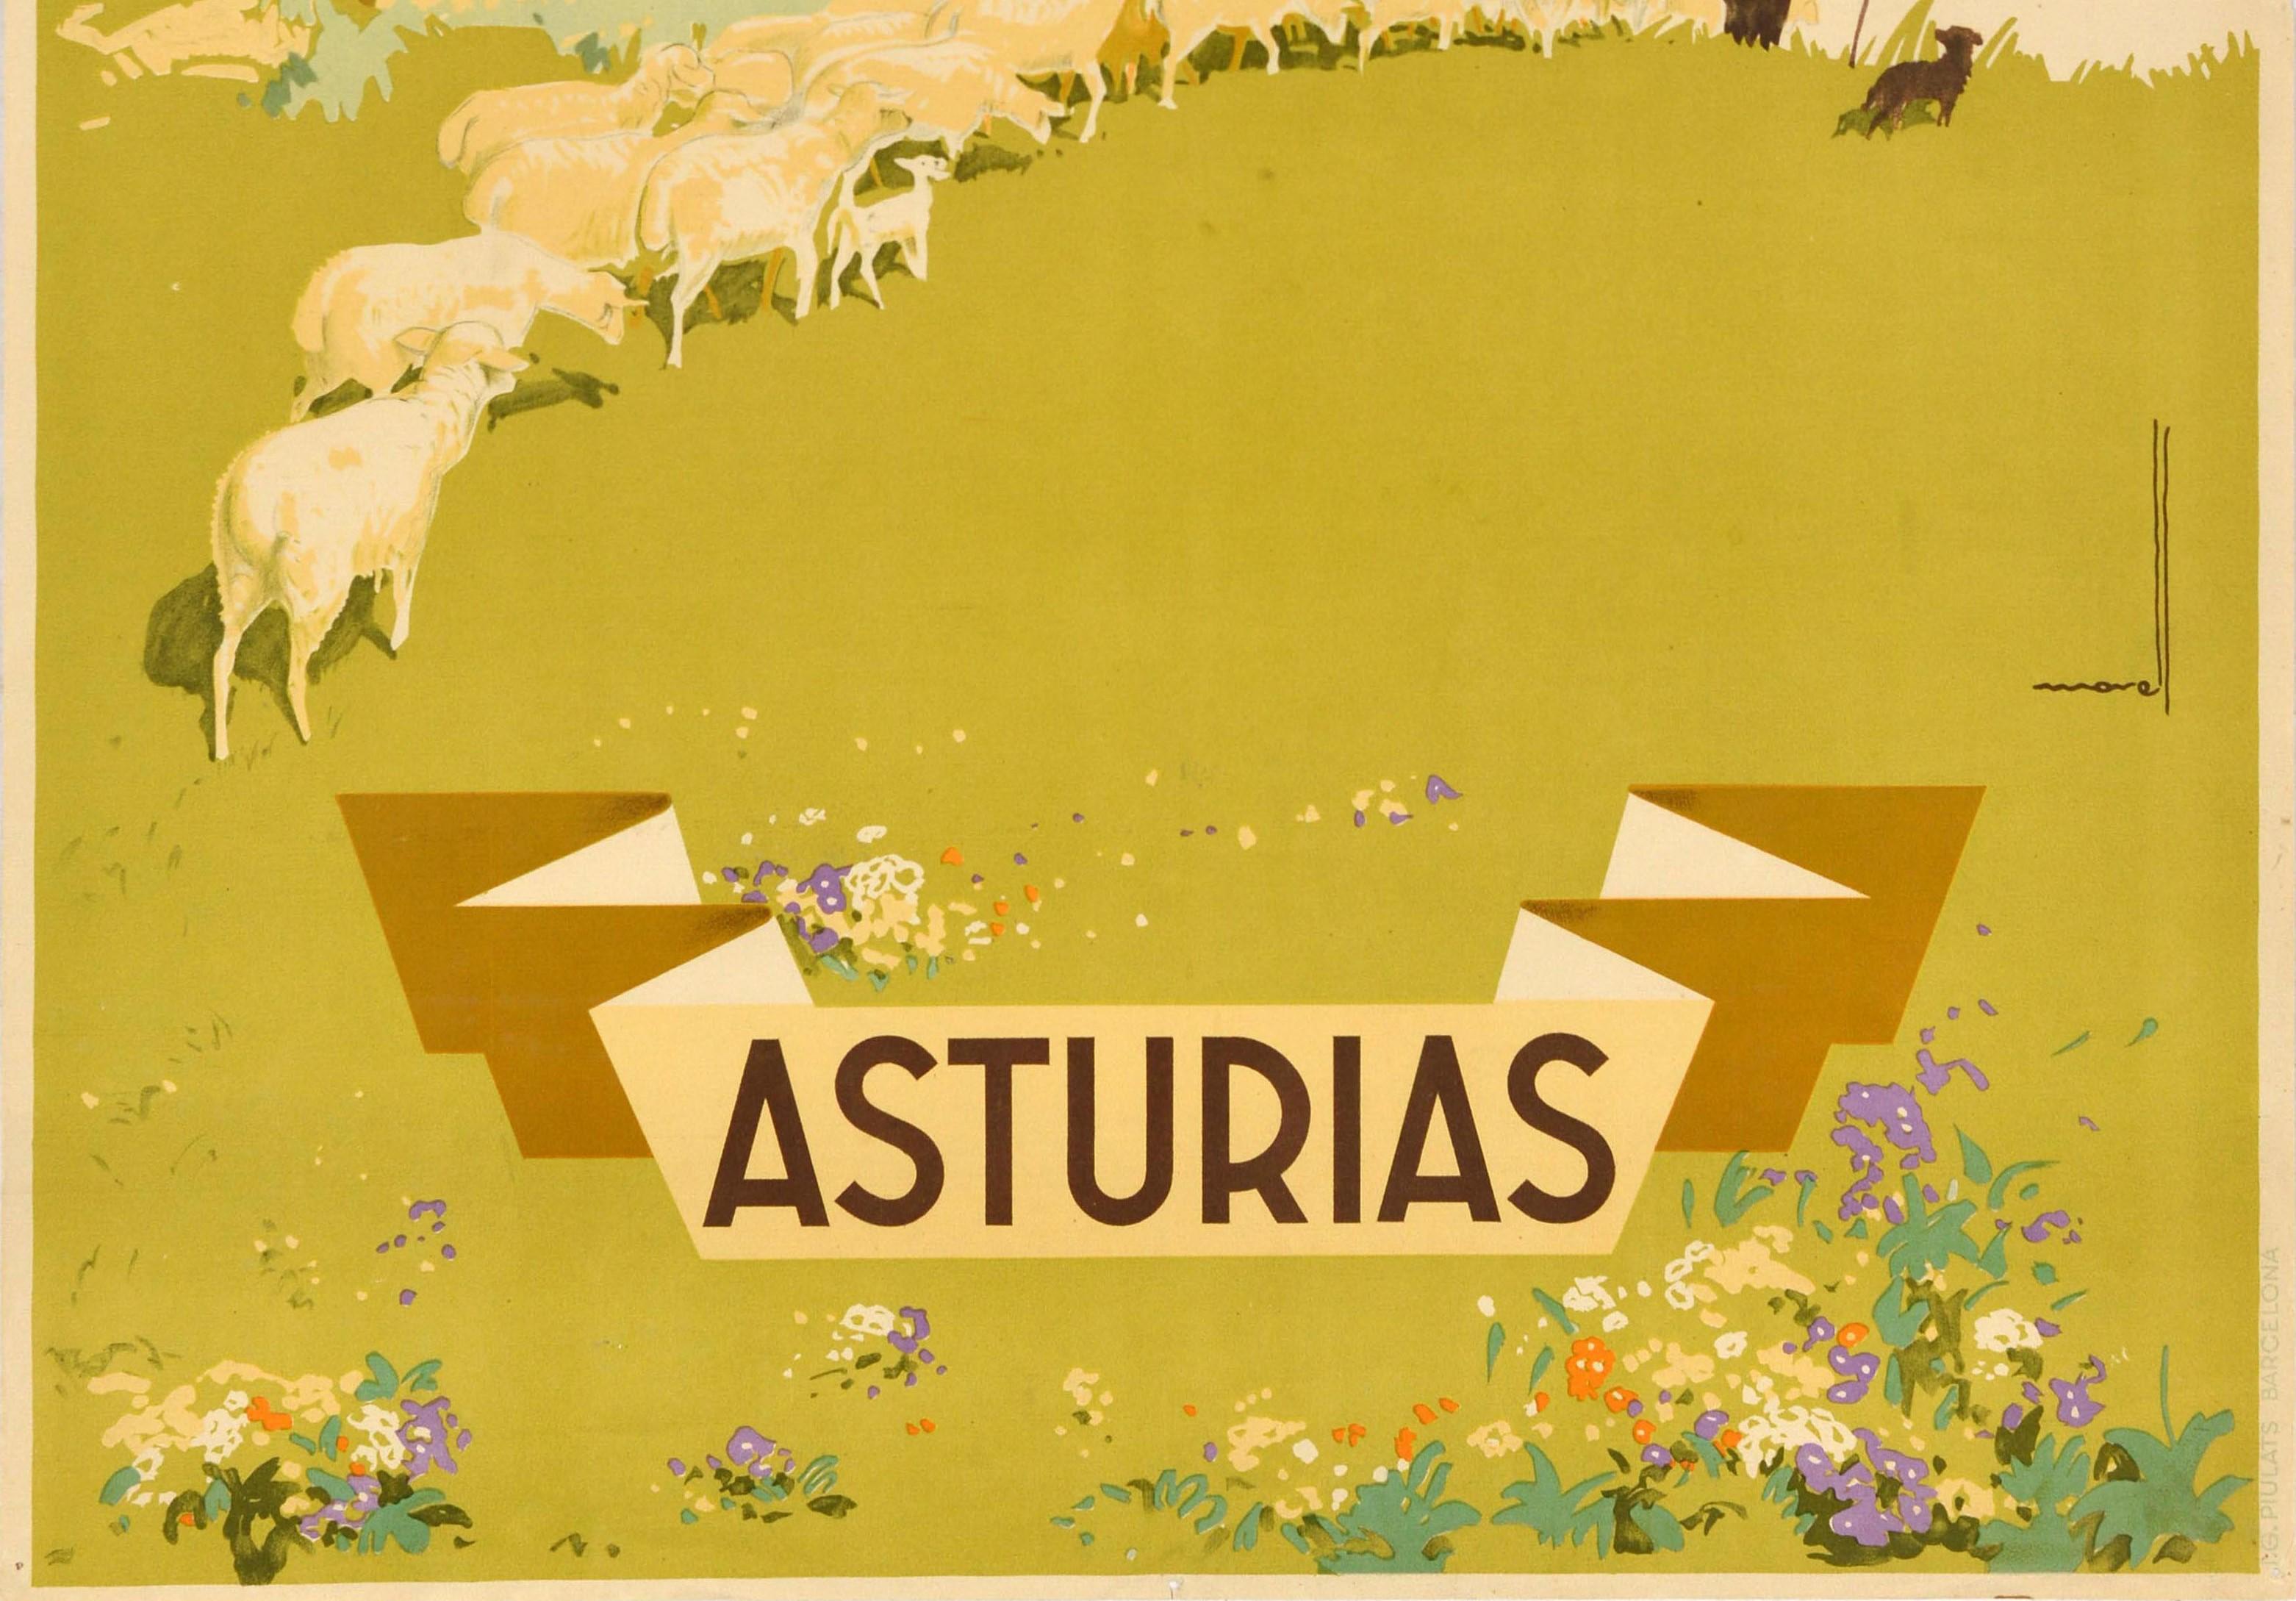 Original Vintage Travel Poster Asturias Spain Cantabrian Mountains Shepherd Art - Brown Print by Jose Morell